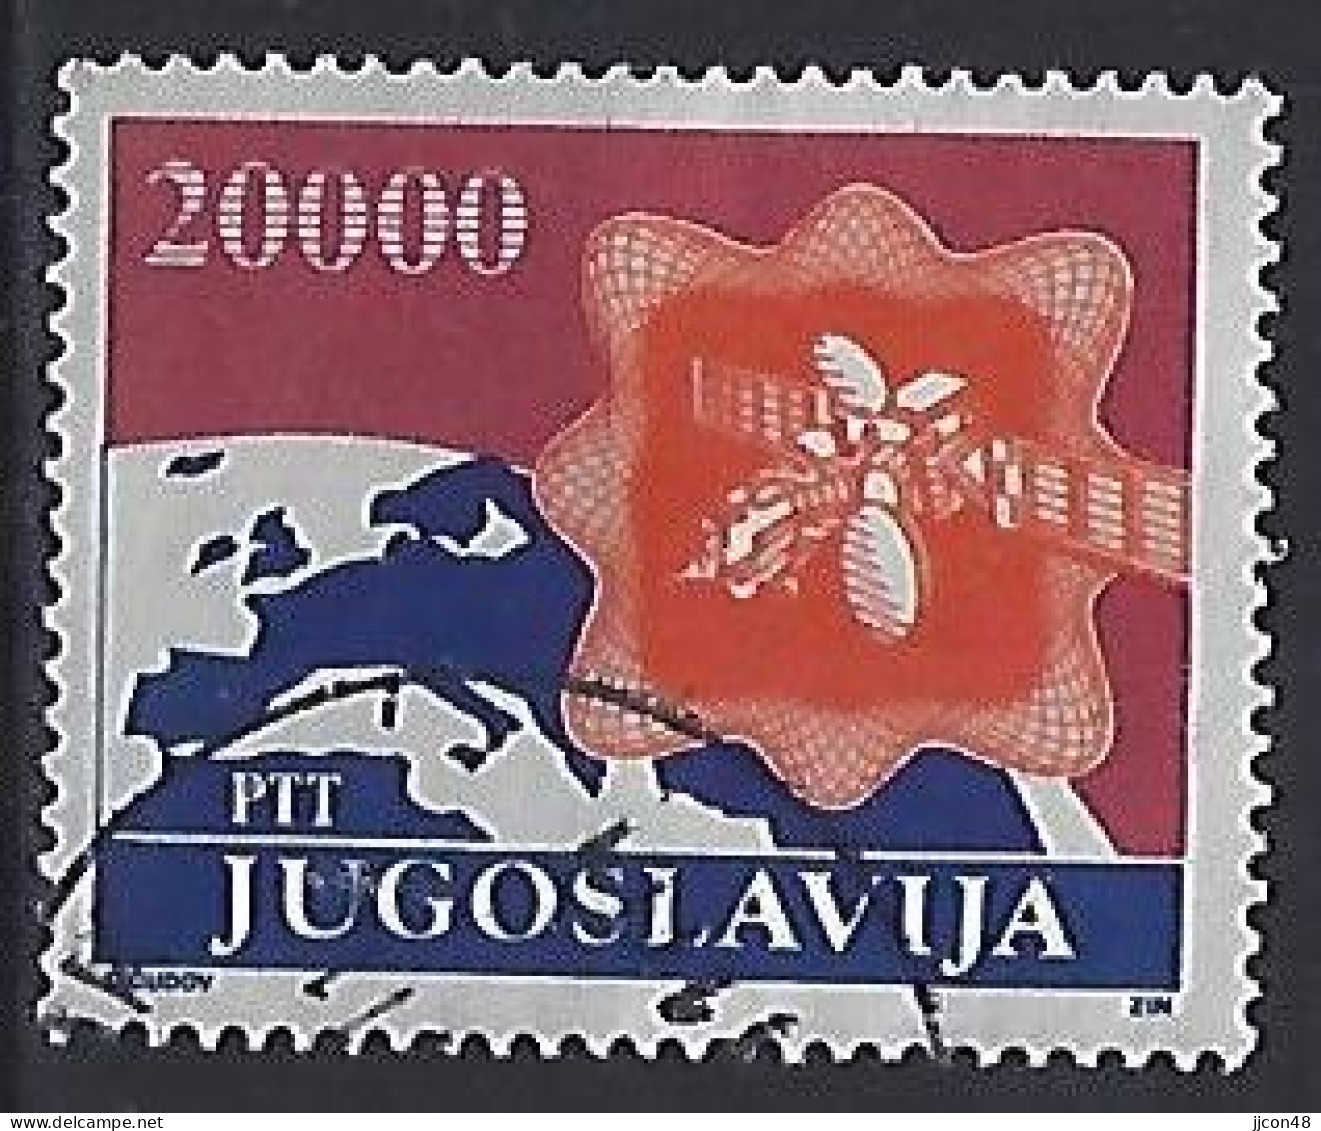 Jugoslavia 1989  Postdienst  (o) Mi.2362 - Usados